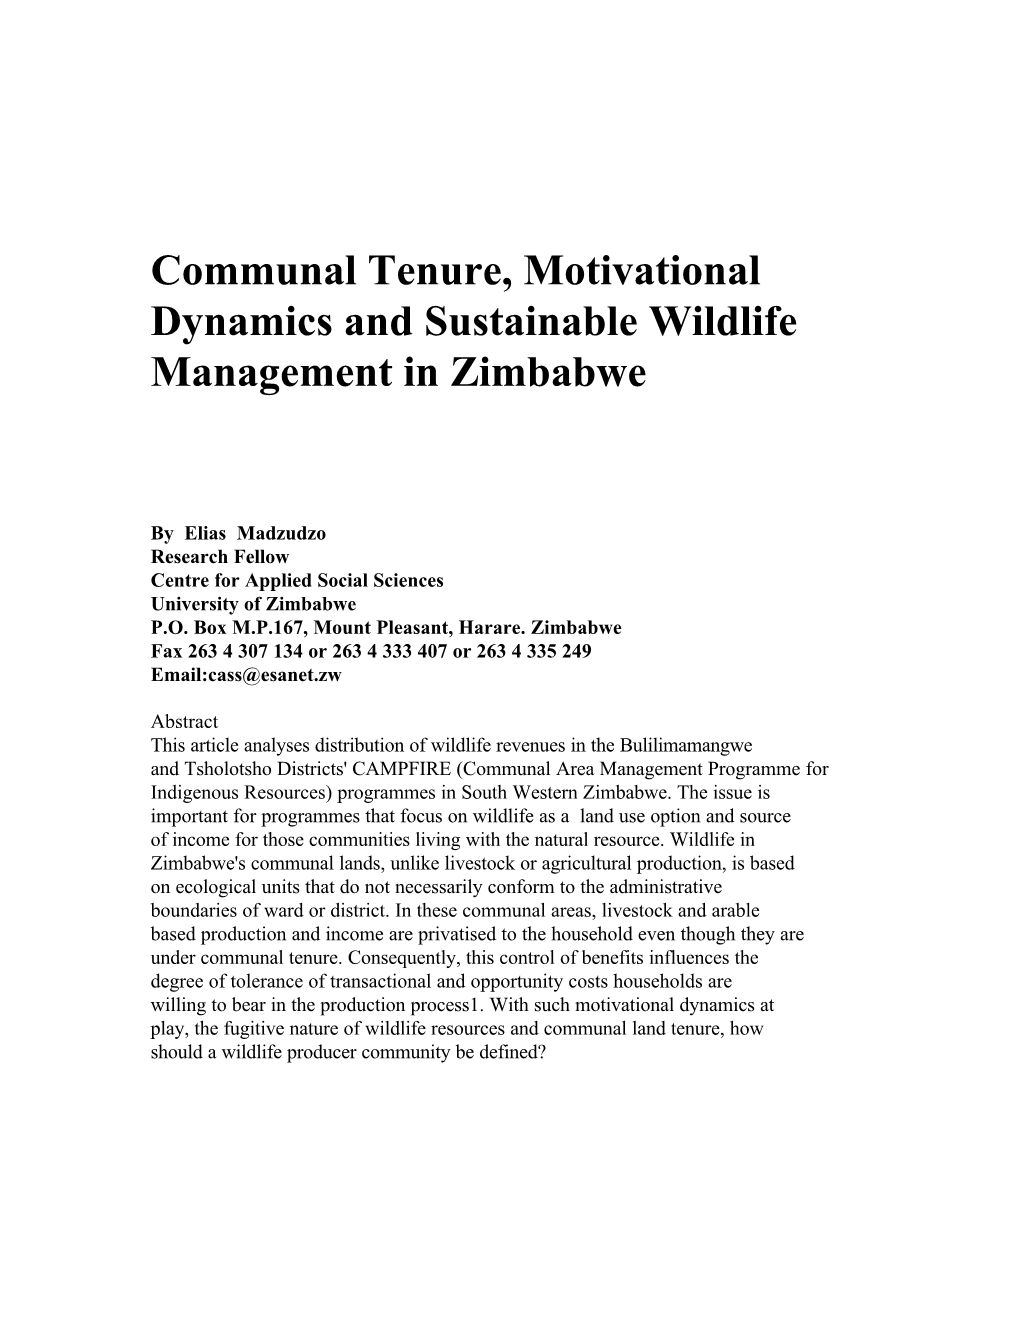 Communal Tenure, Motivational Dynamics and Sustainable Wildlife Management in Zimbabwe